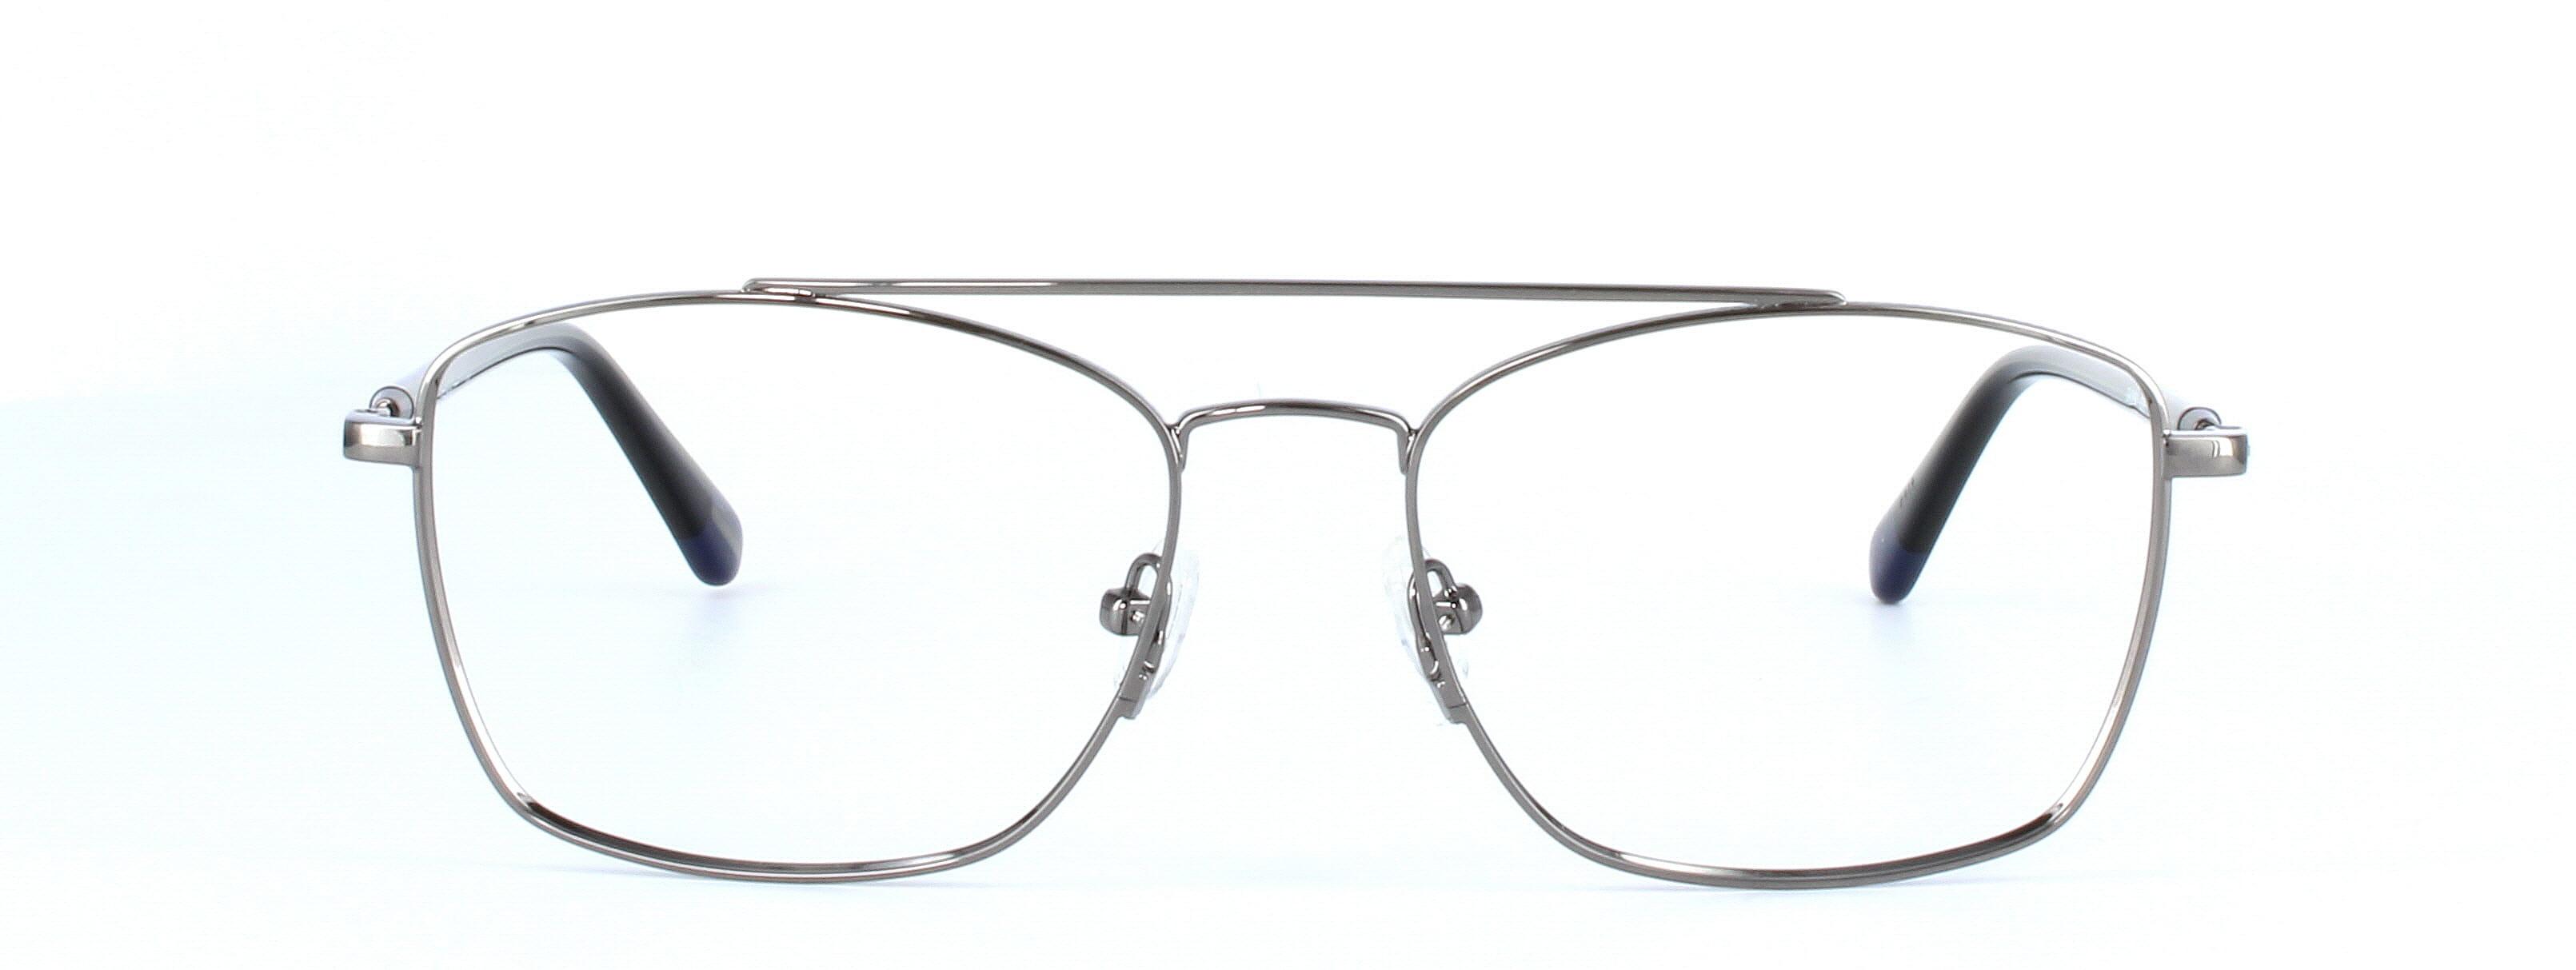 GANT 3194 - Gents aviator style metal glasses in gunmetal - image view 5